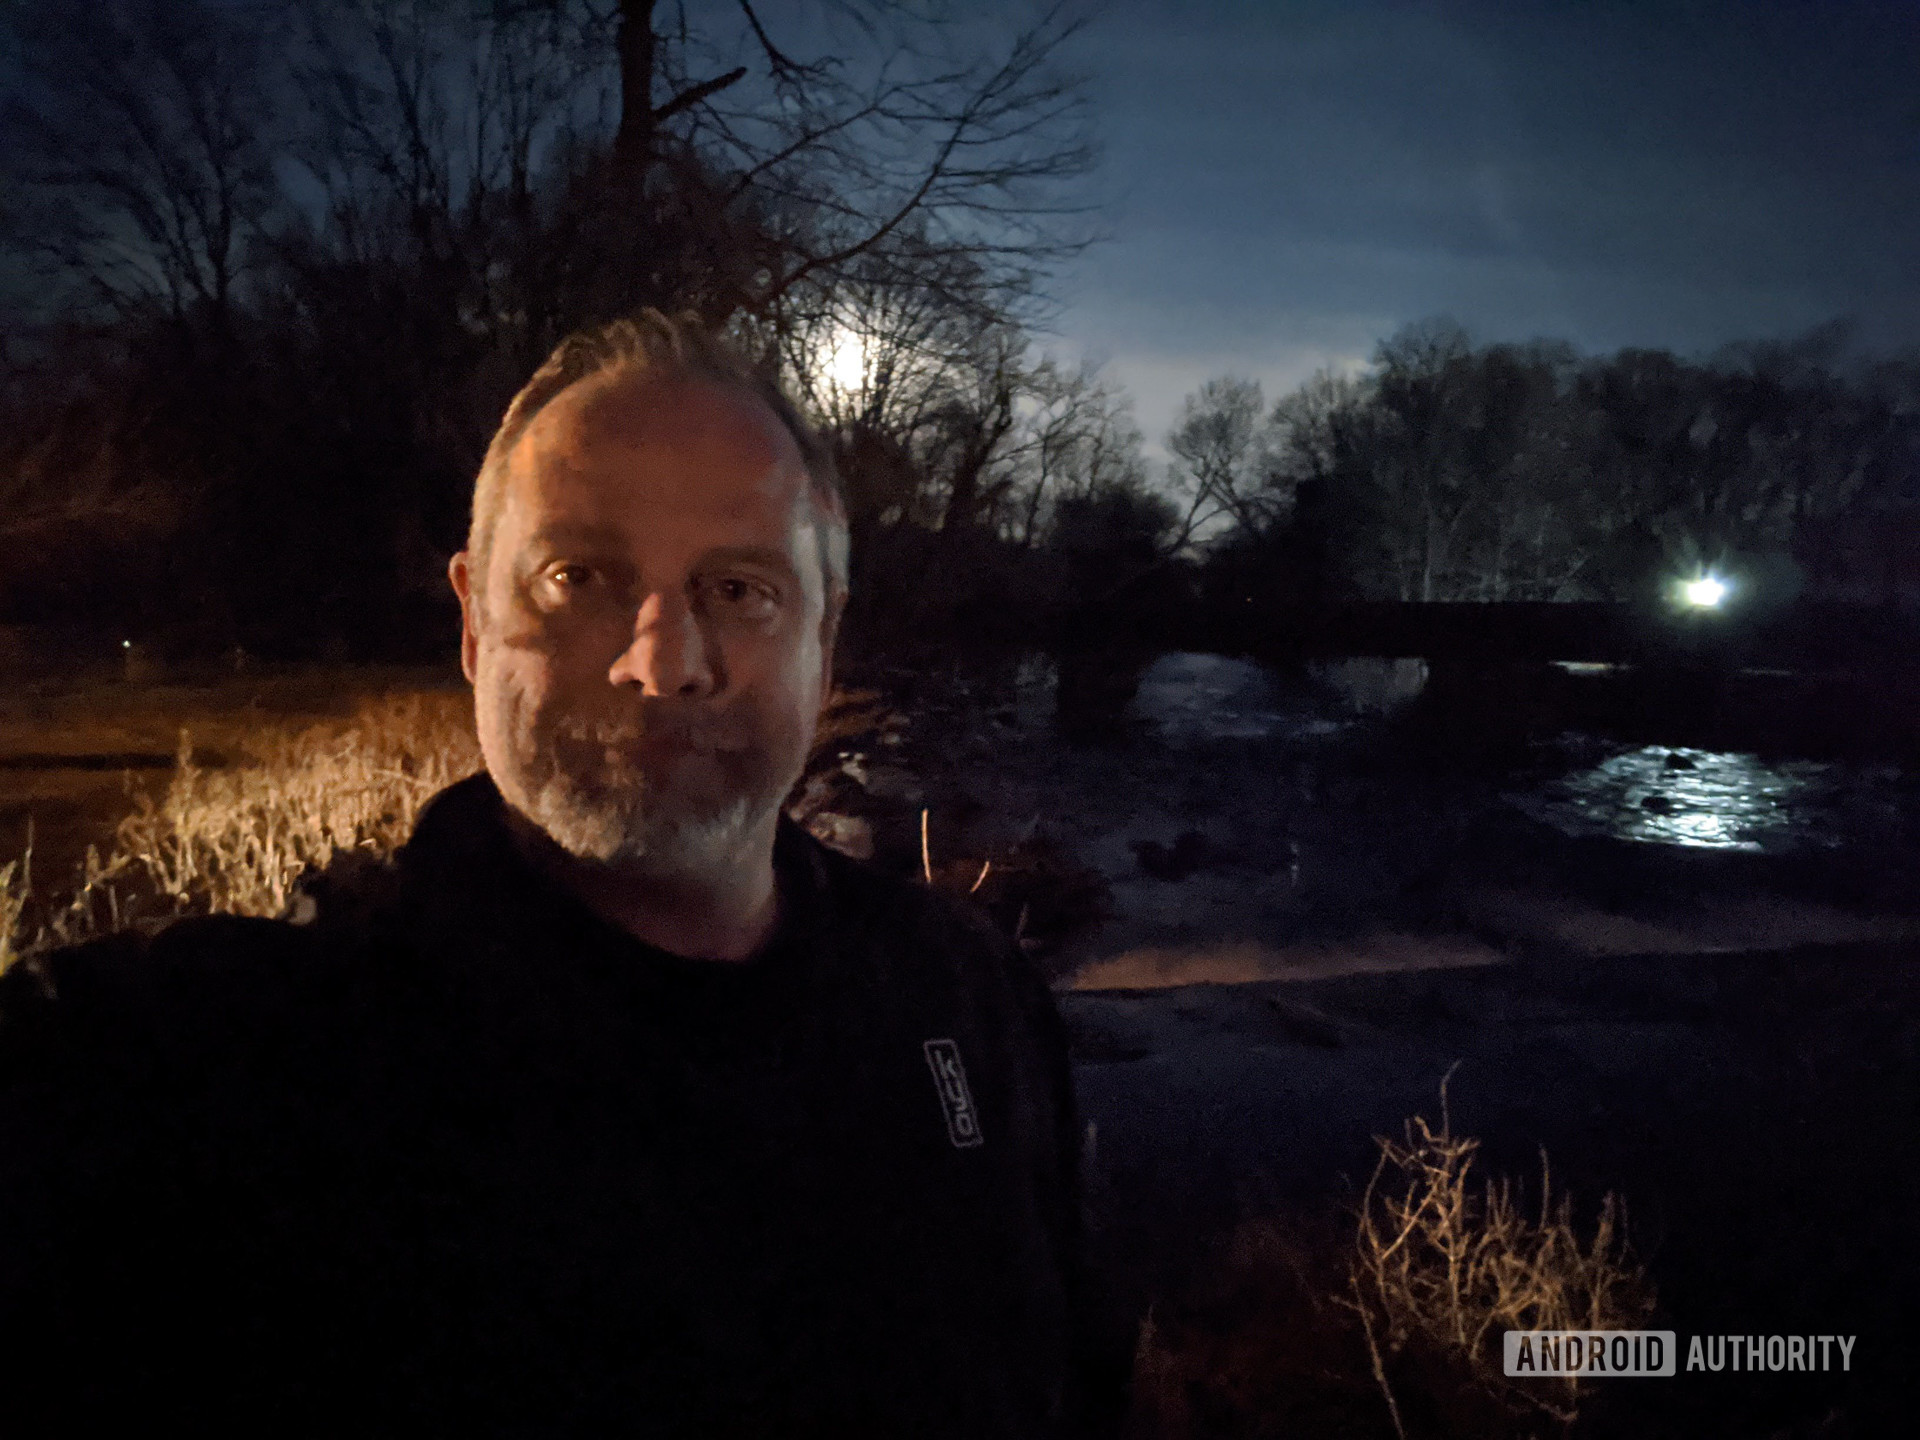 Google Pixel 4 XL camera sample night mode selfie